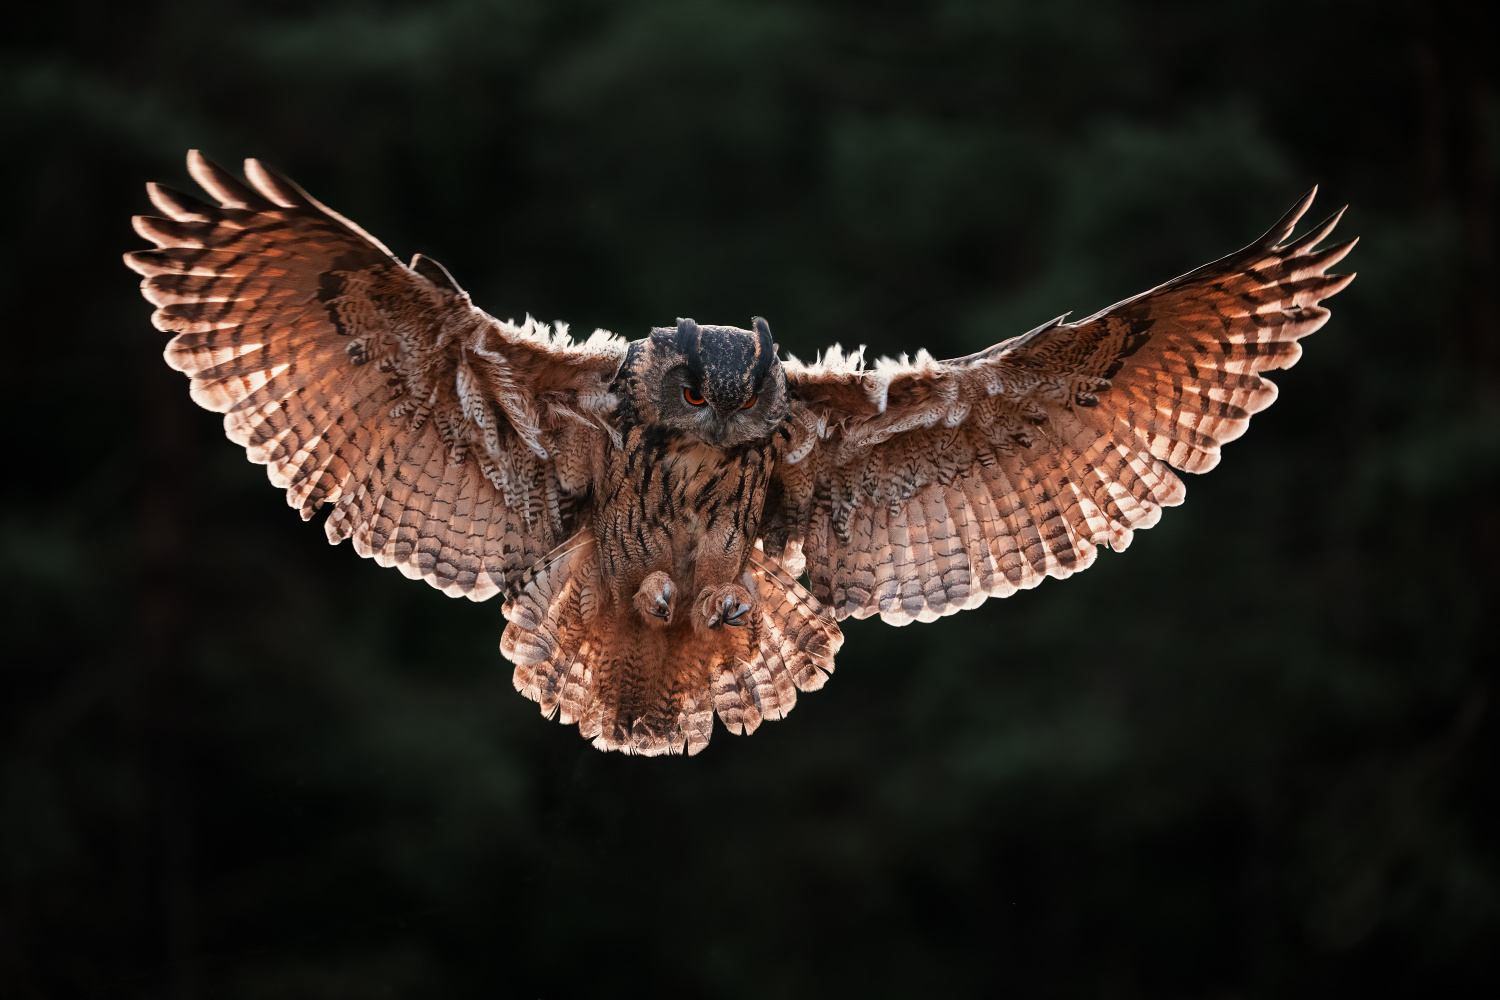 výr velký (Bubo bubo) Eurasian eagle-owl